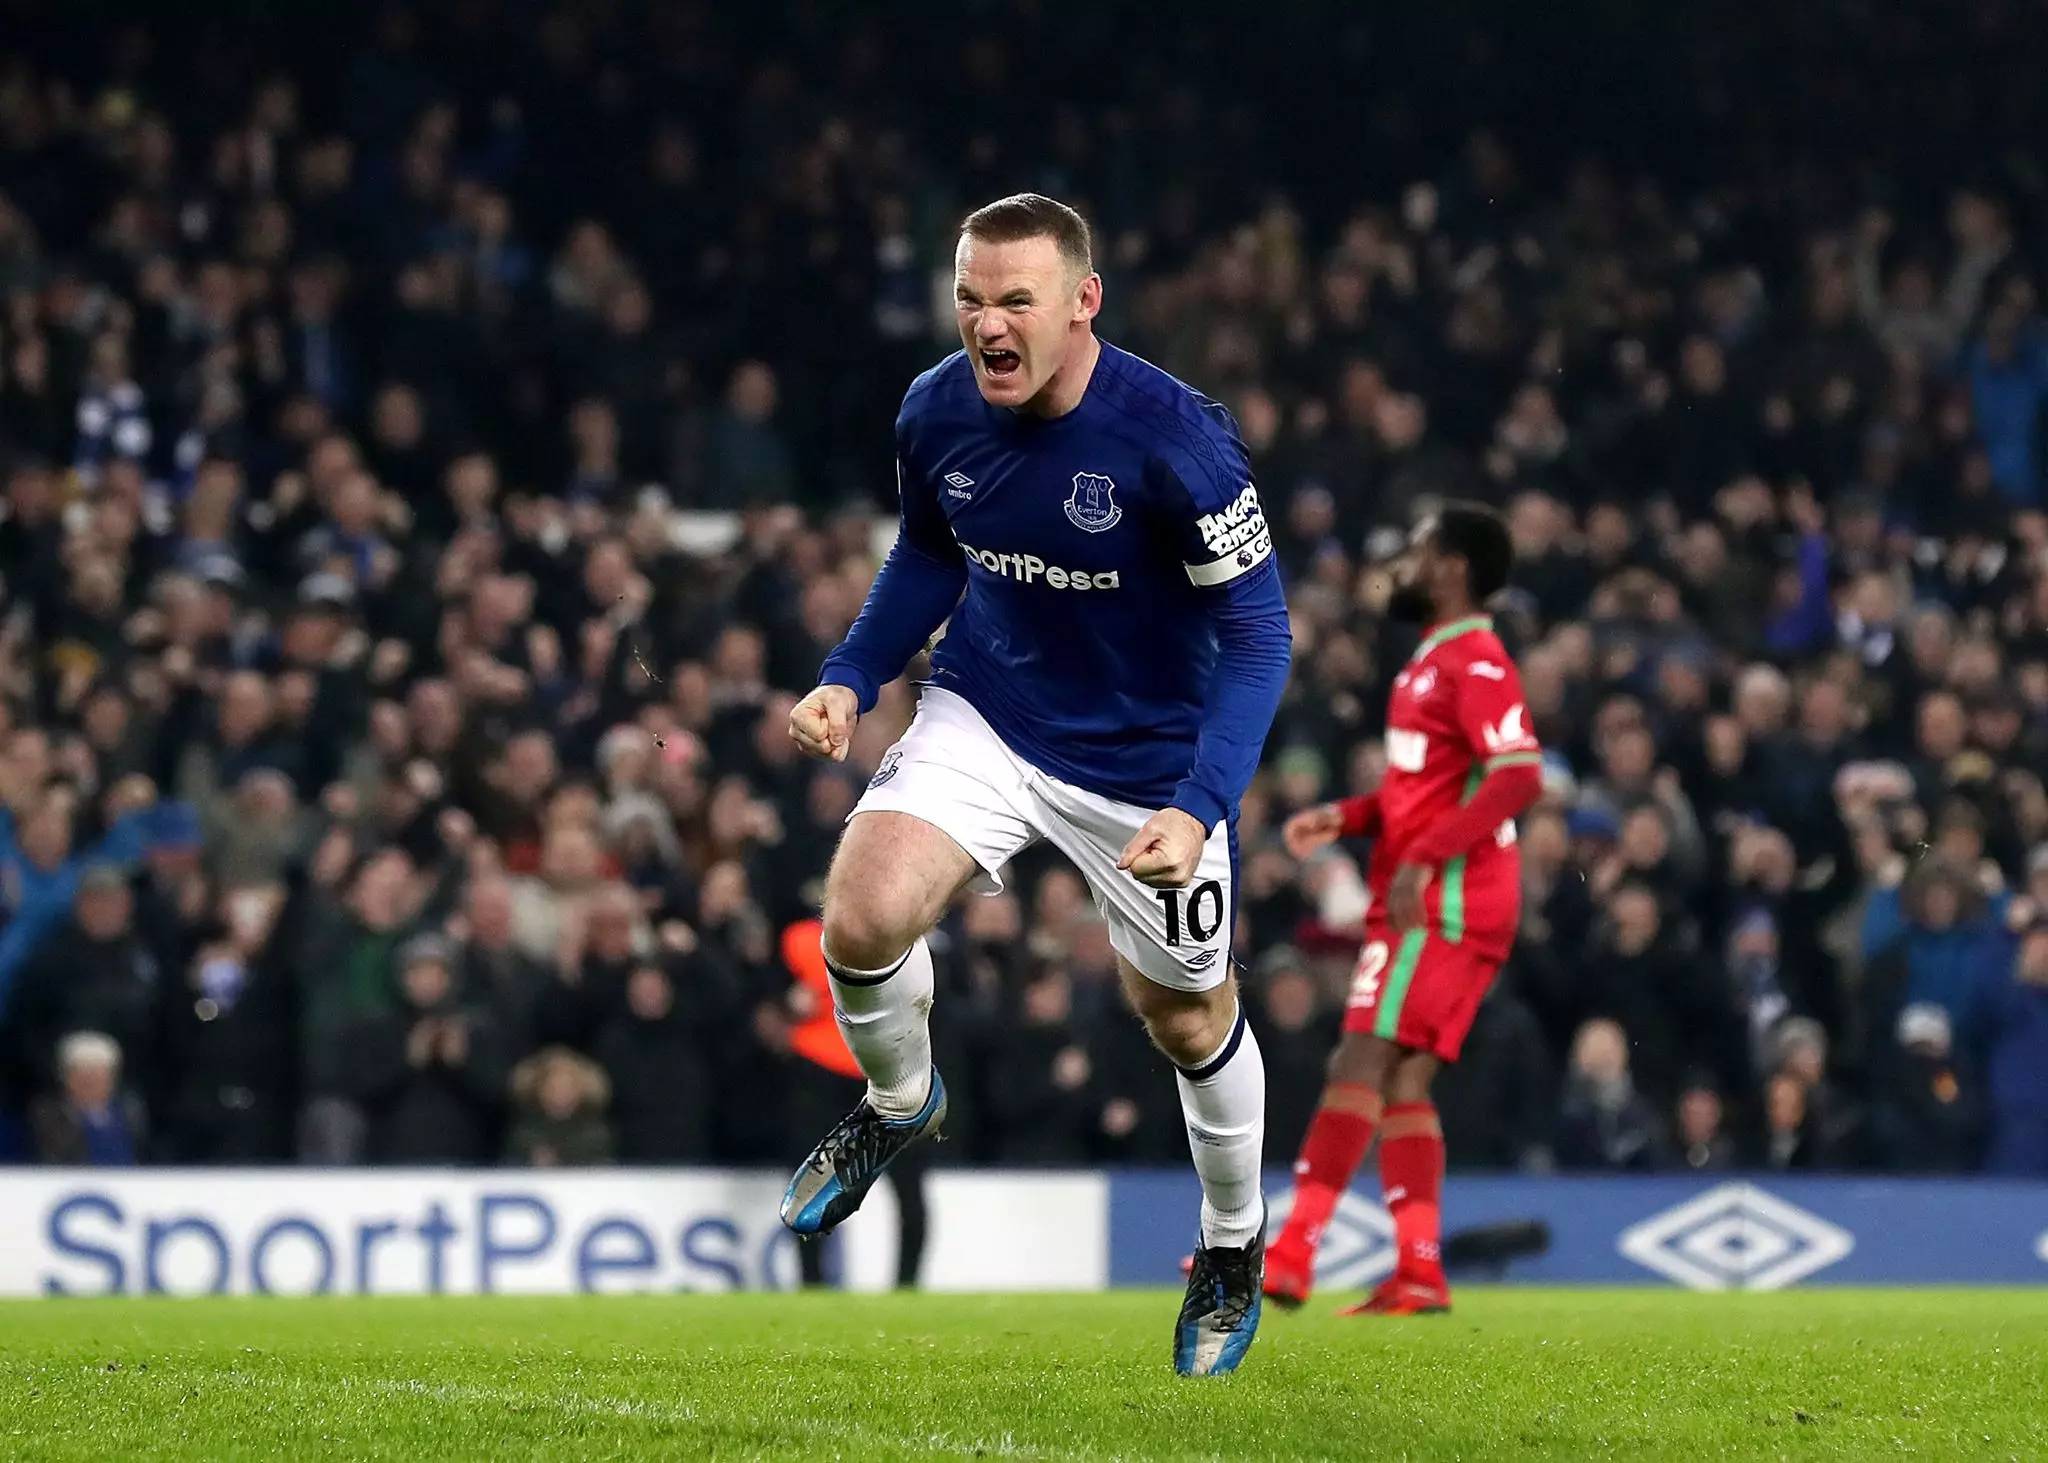 Rooney celebrates scoring a goal. Image: PA